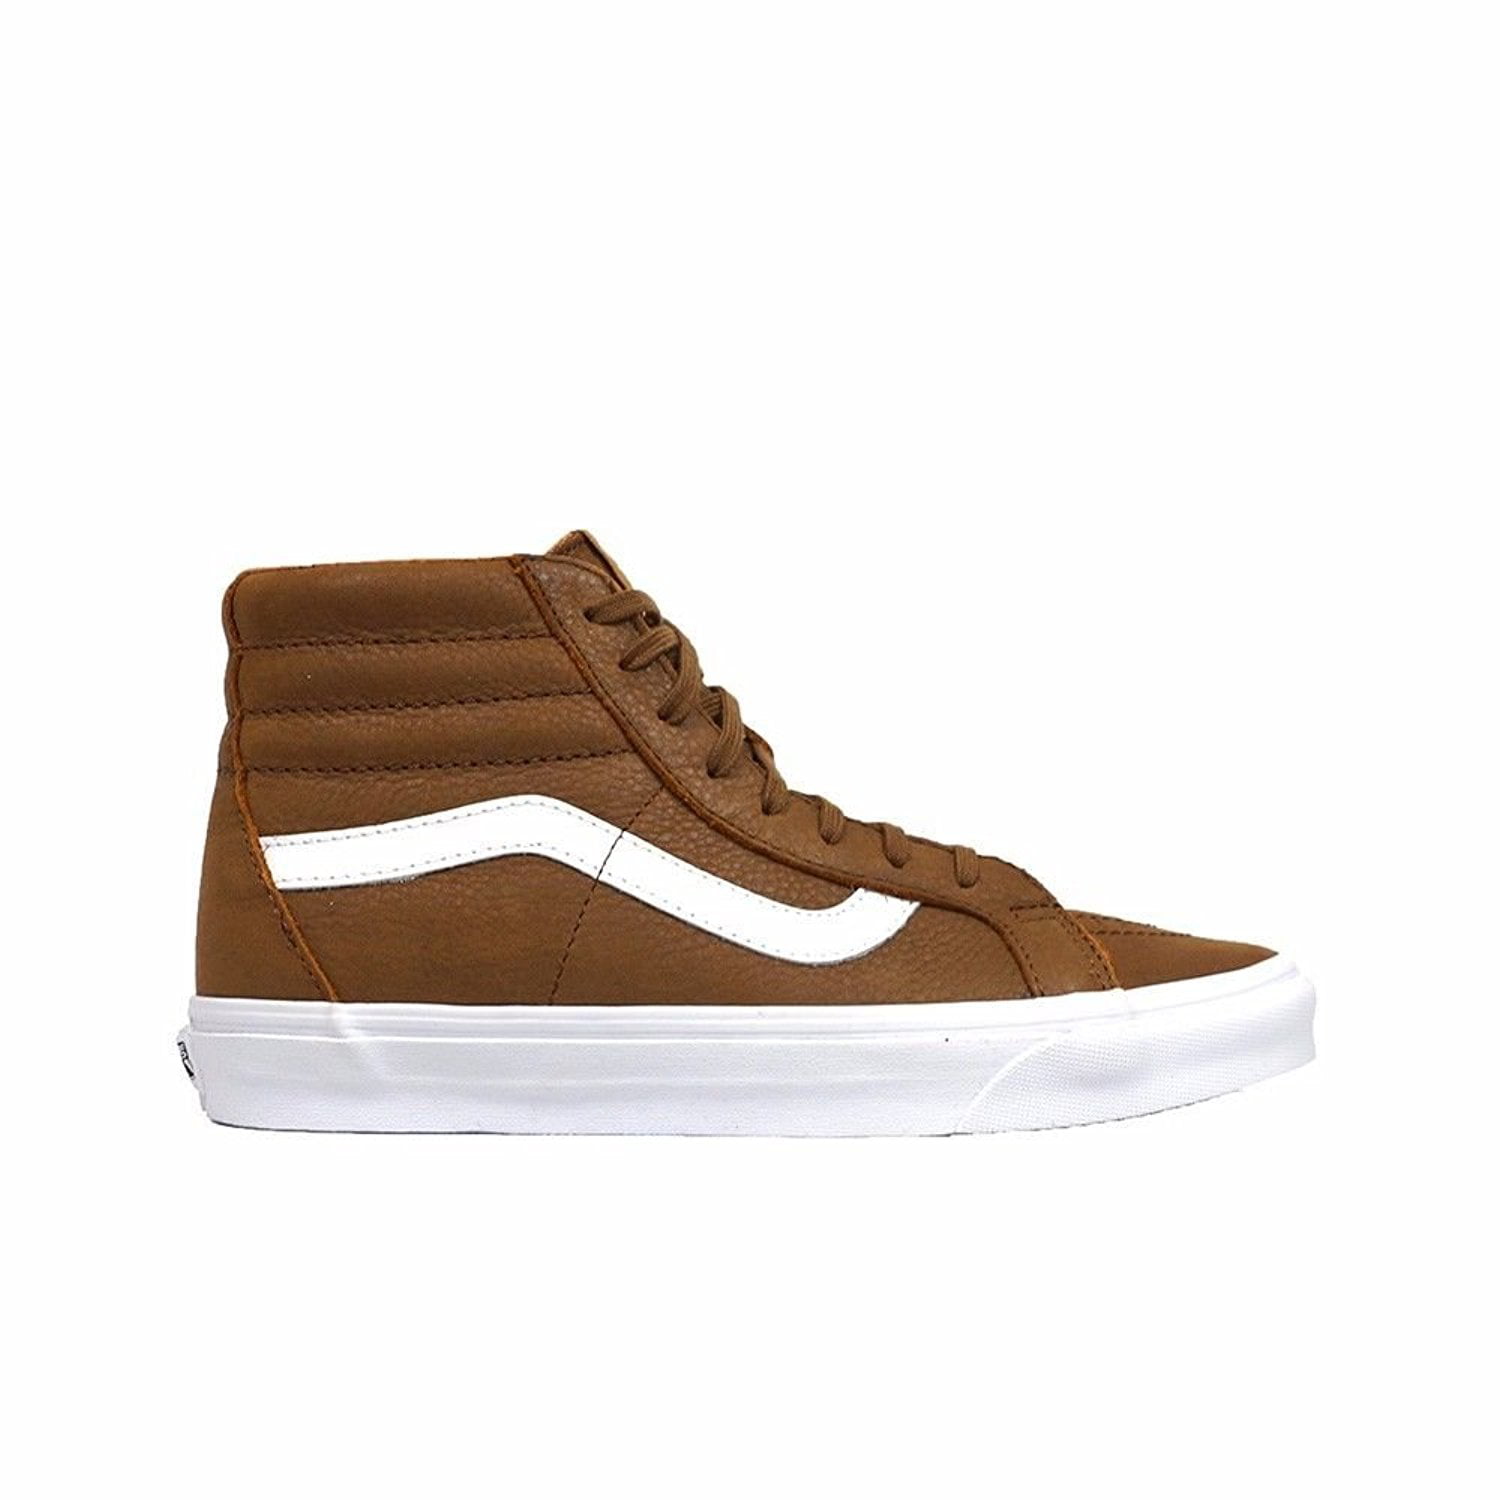 Vans SK8 Hi Reissue Premium Leather Dachshund Men's Skate Shoes Size 7 ...